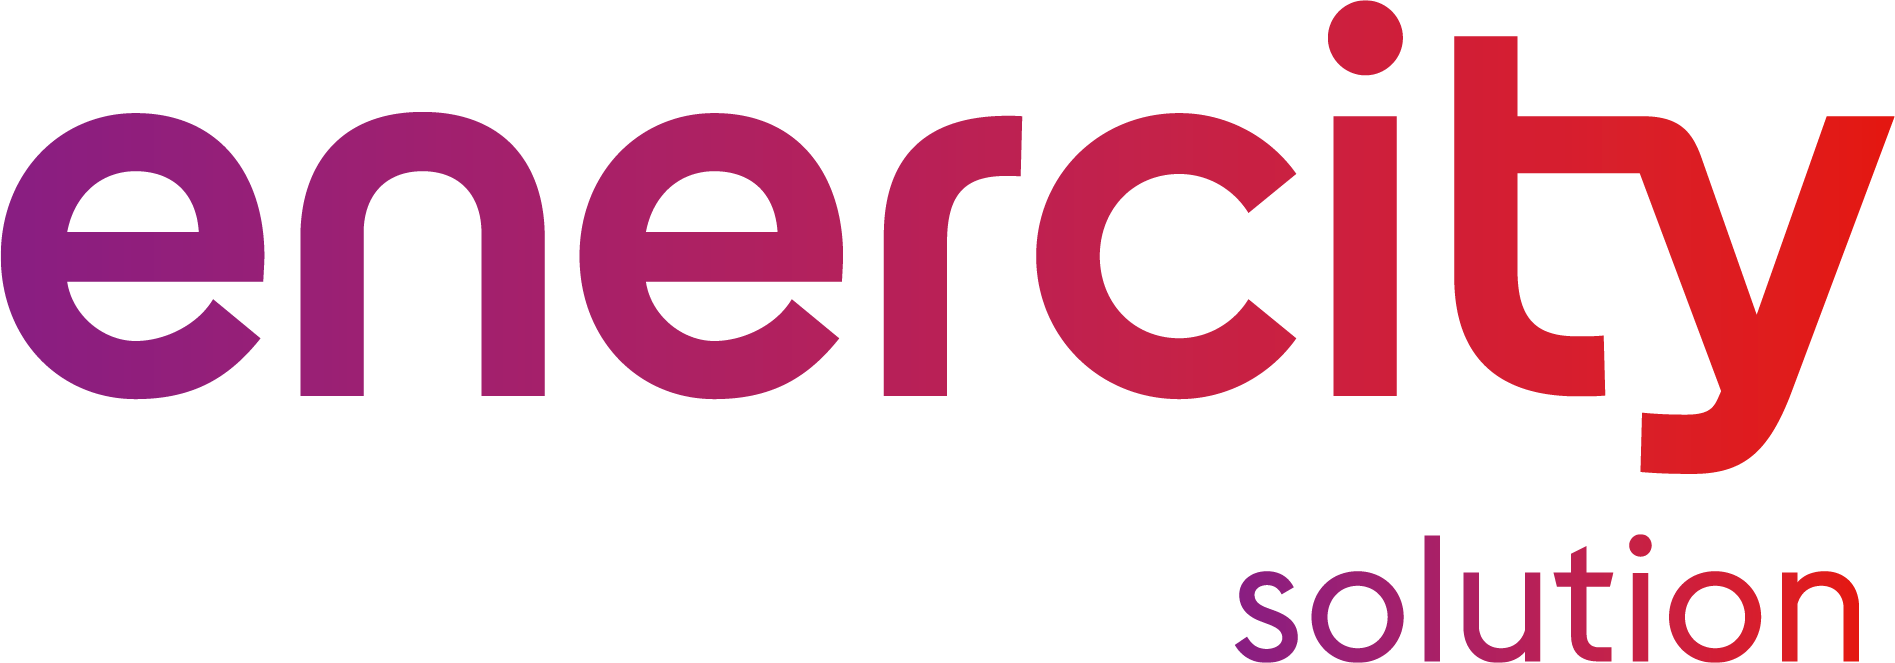 enercitiy solution Logo